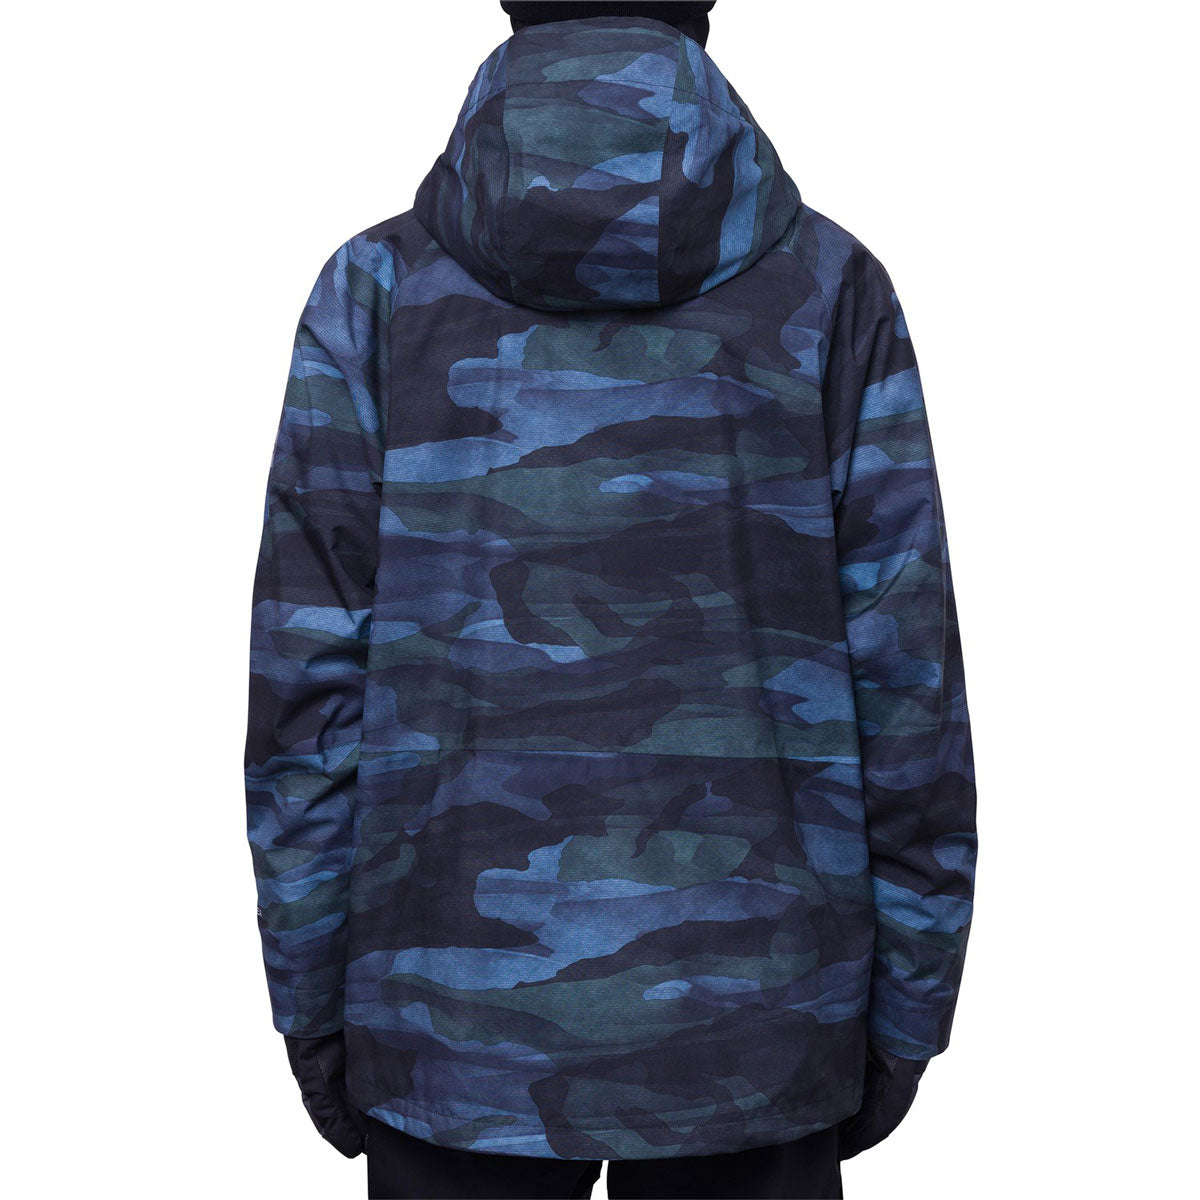 686 Gore-Tex Core Shell Snowboard Jacket - Steel Blue Waterland Camo image 2